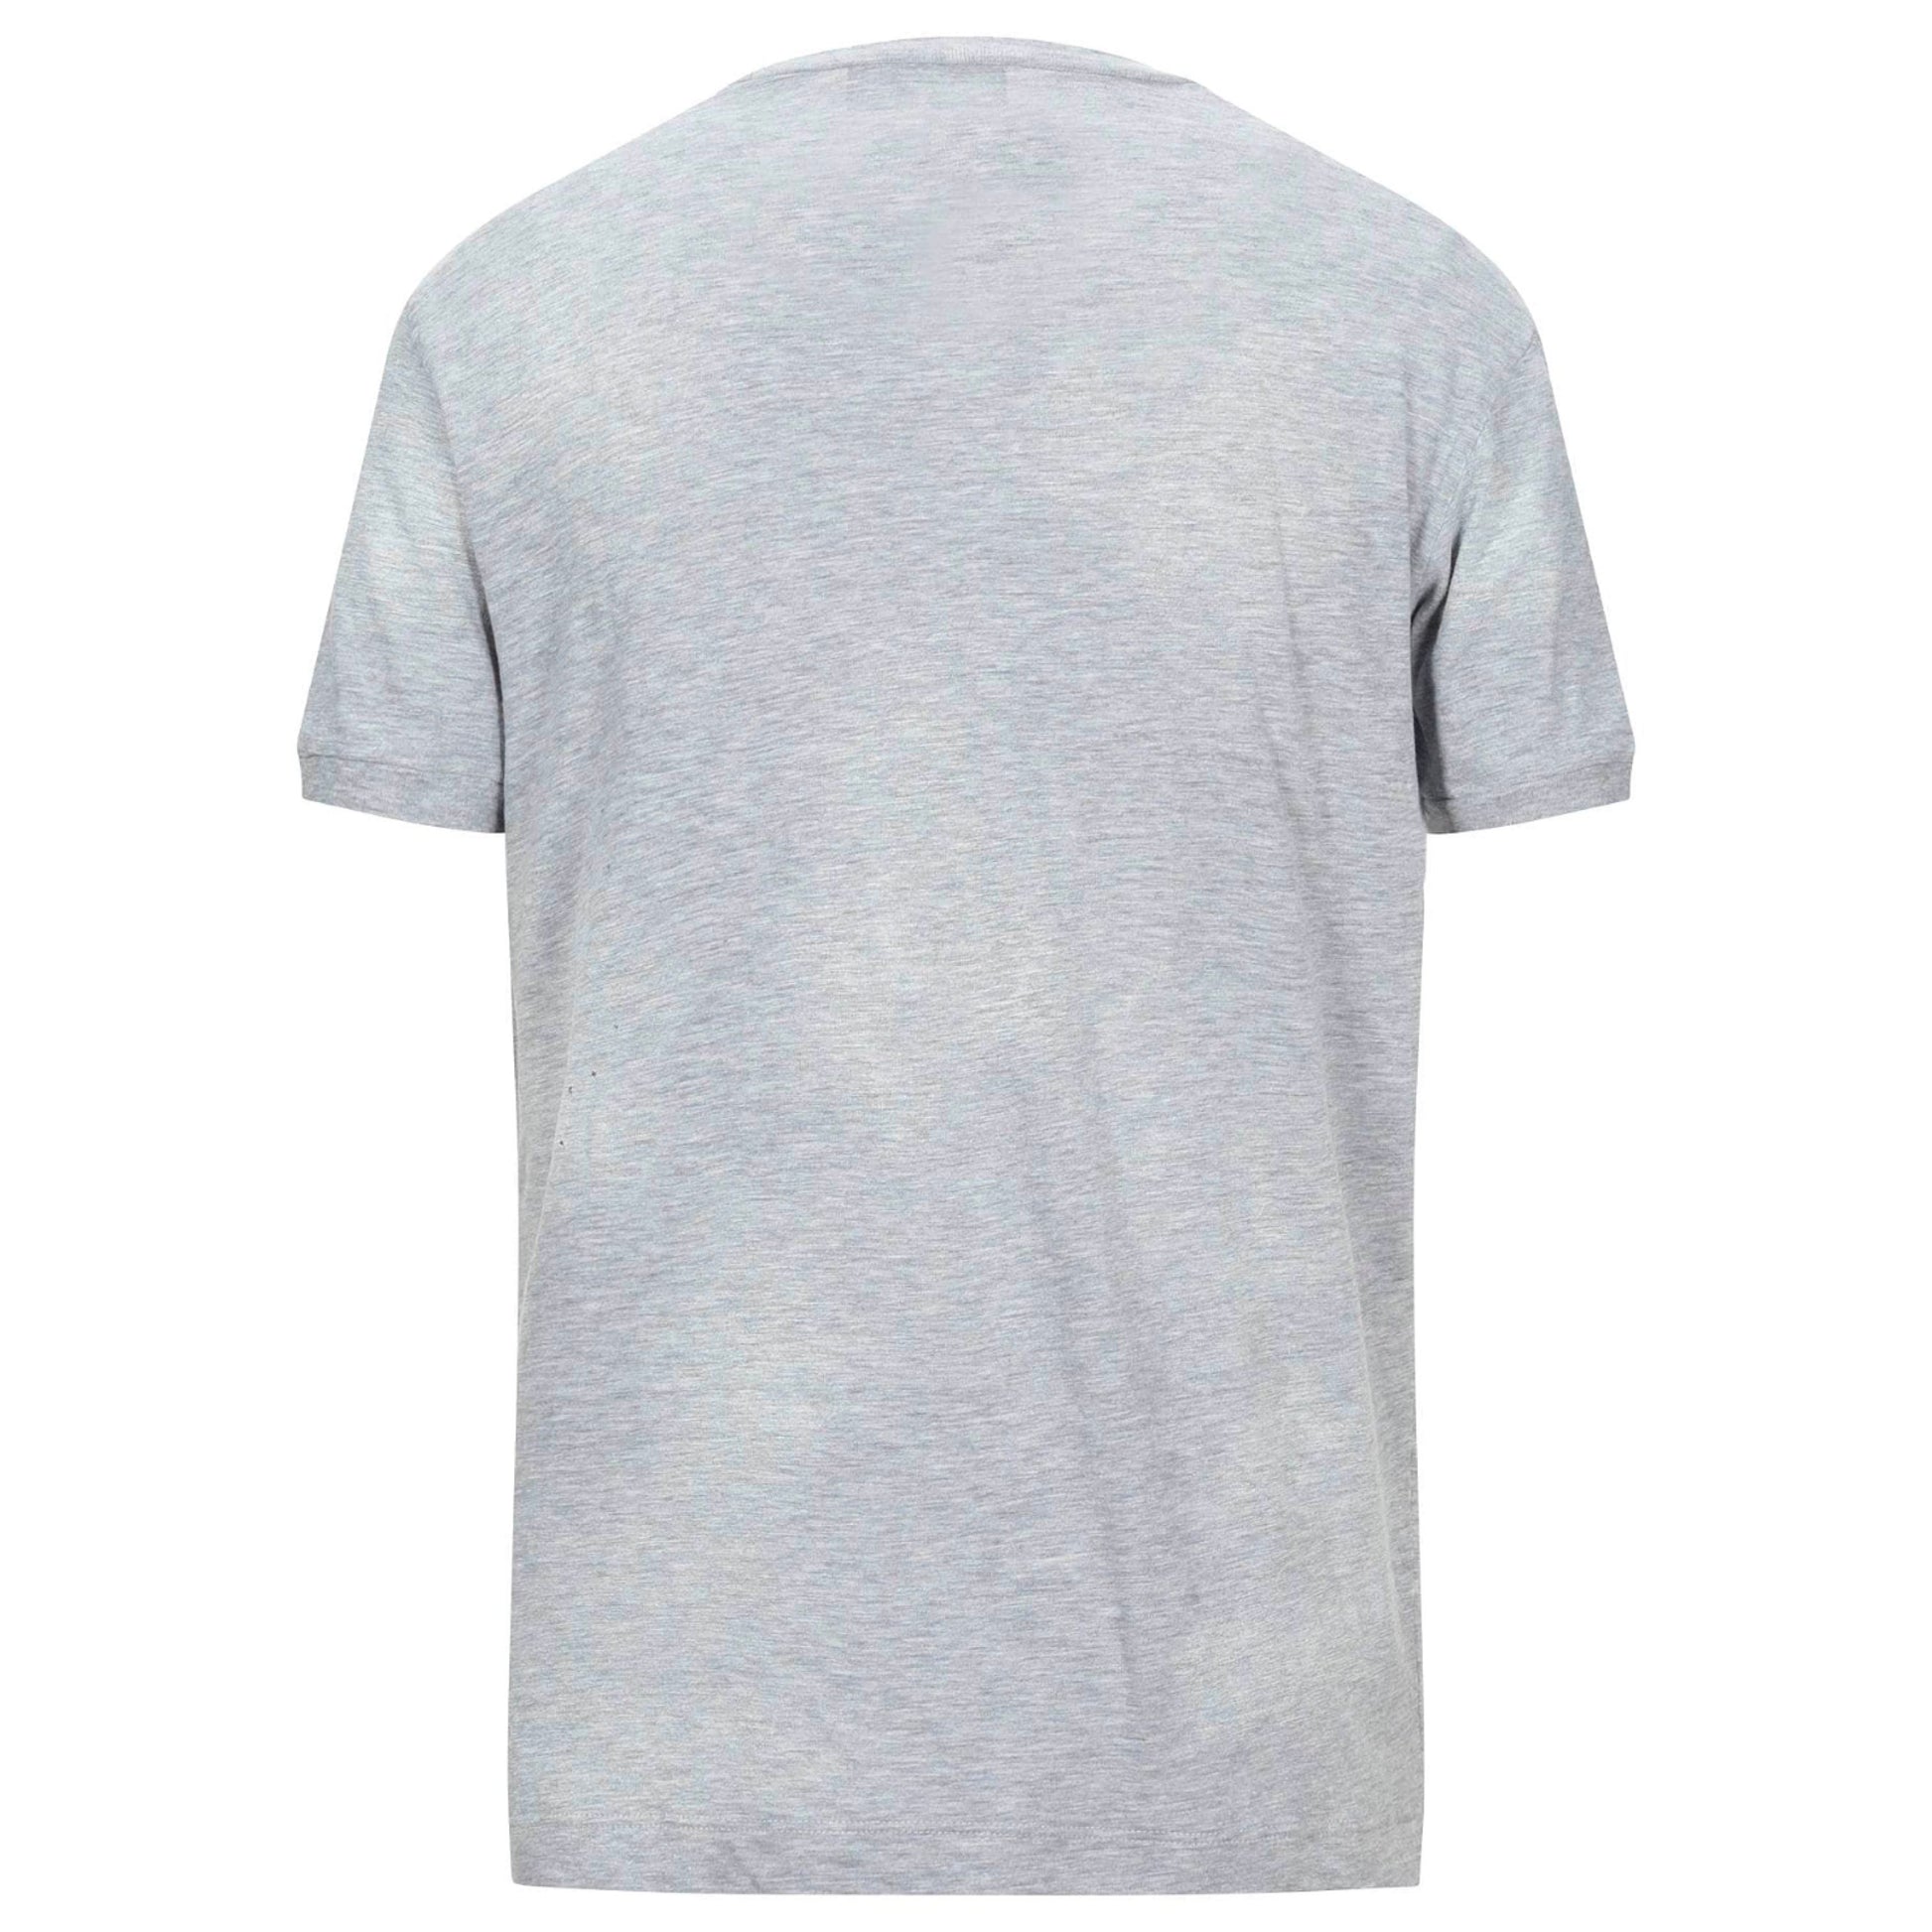 DSQUARED2 Grey Caten Twins T-Shirt T-Shirt DSQUARED2 